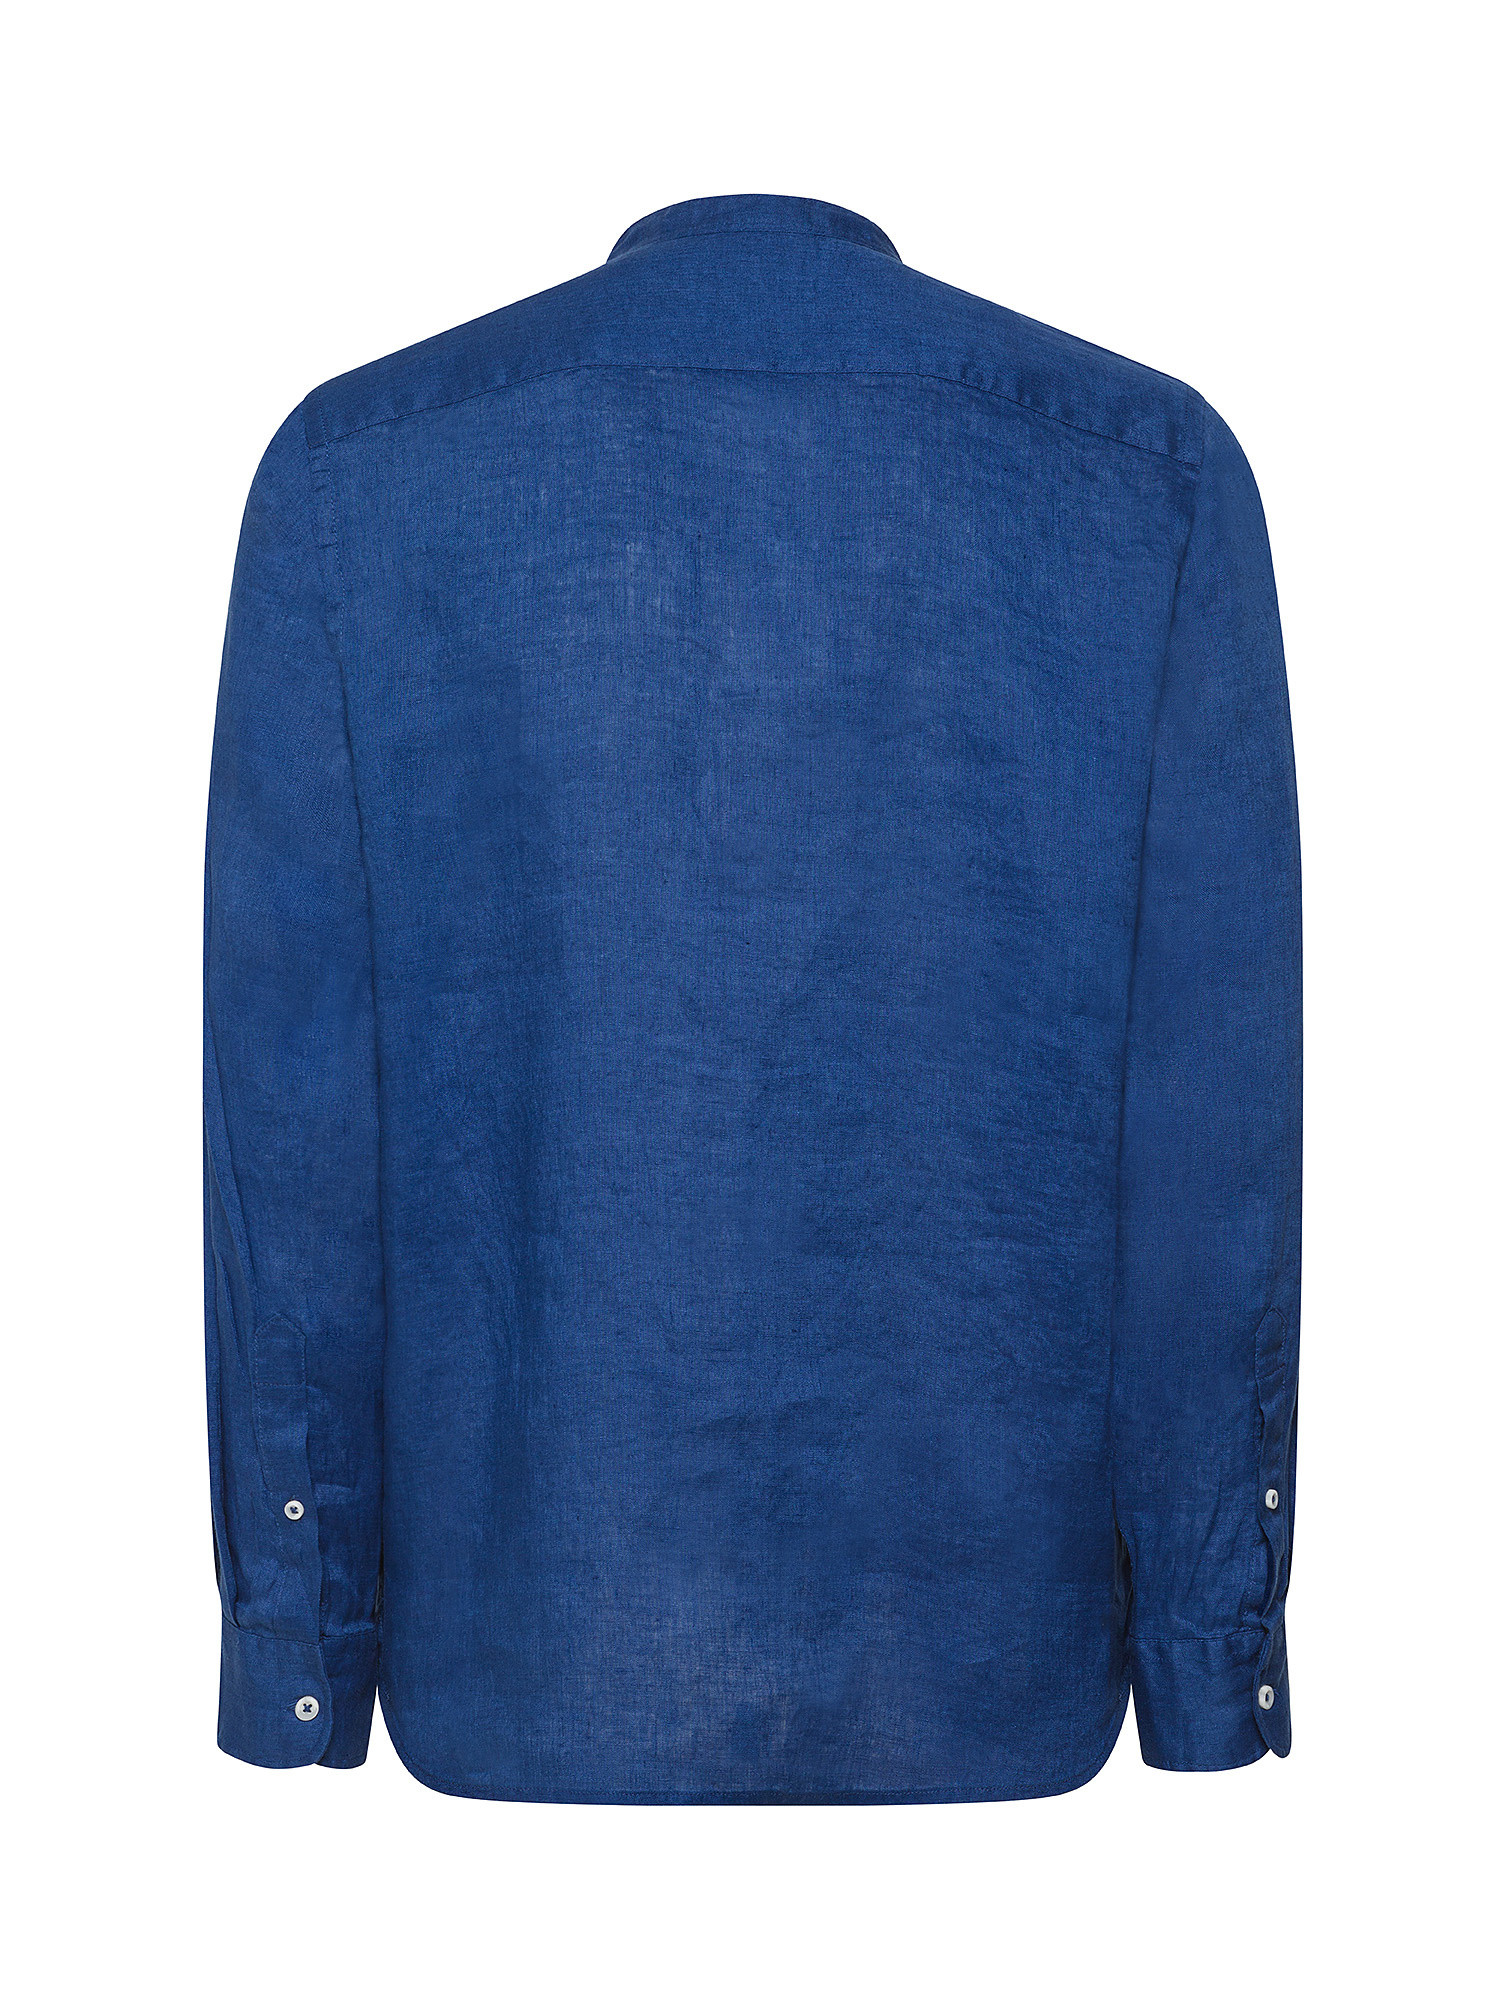 JCT - Camicia coreana in puro lino, Blu royal, large image number 1